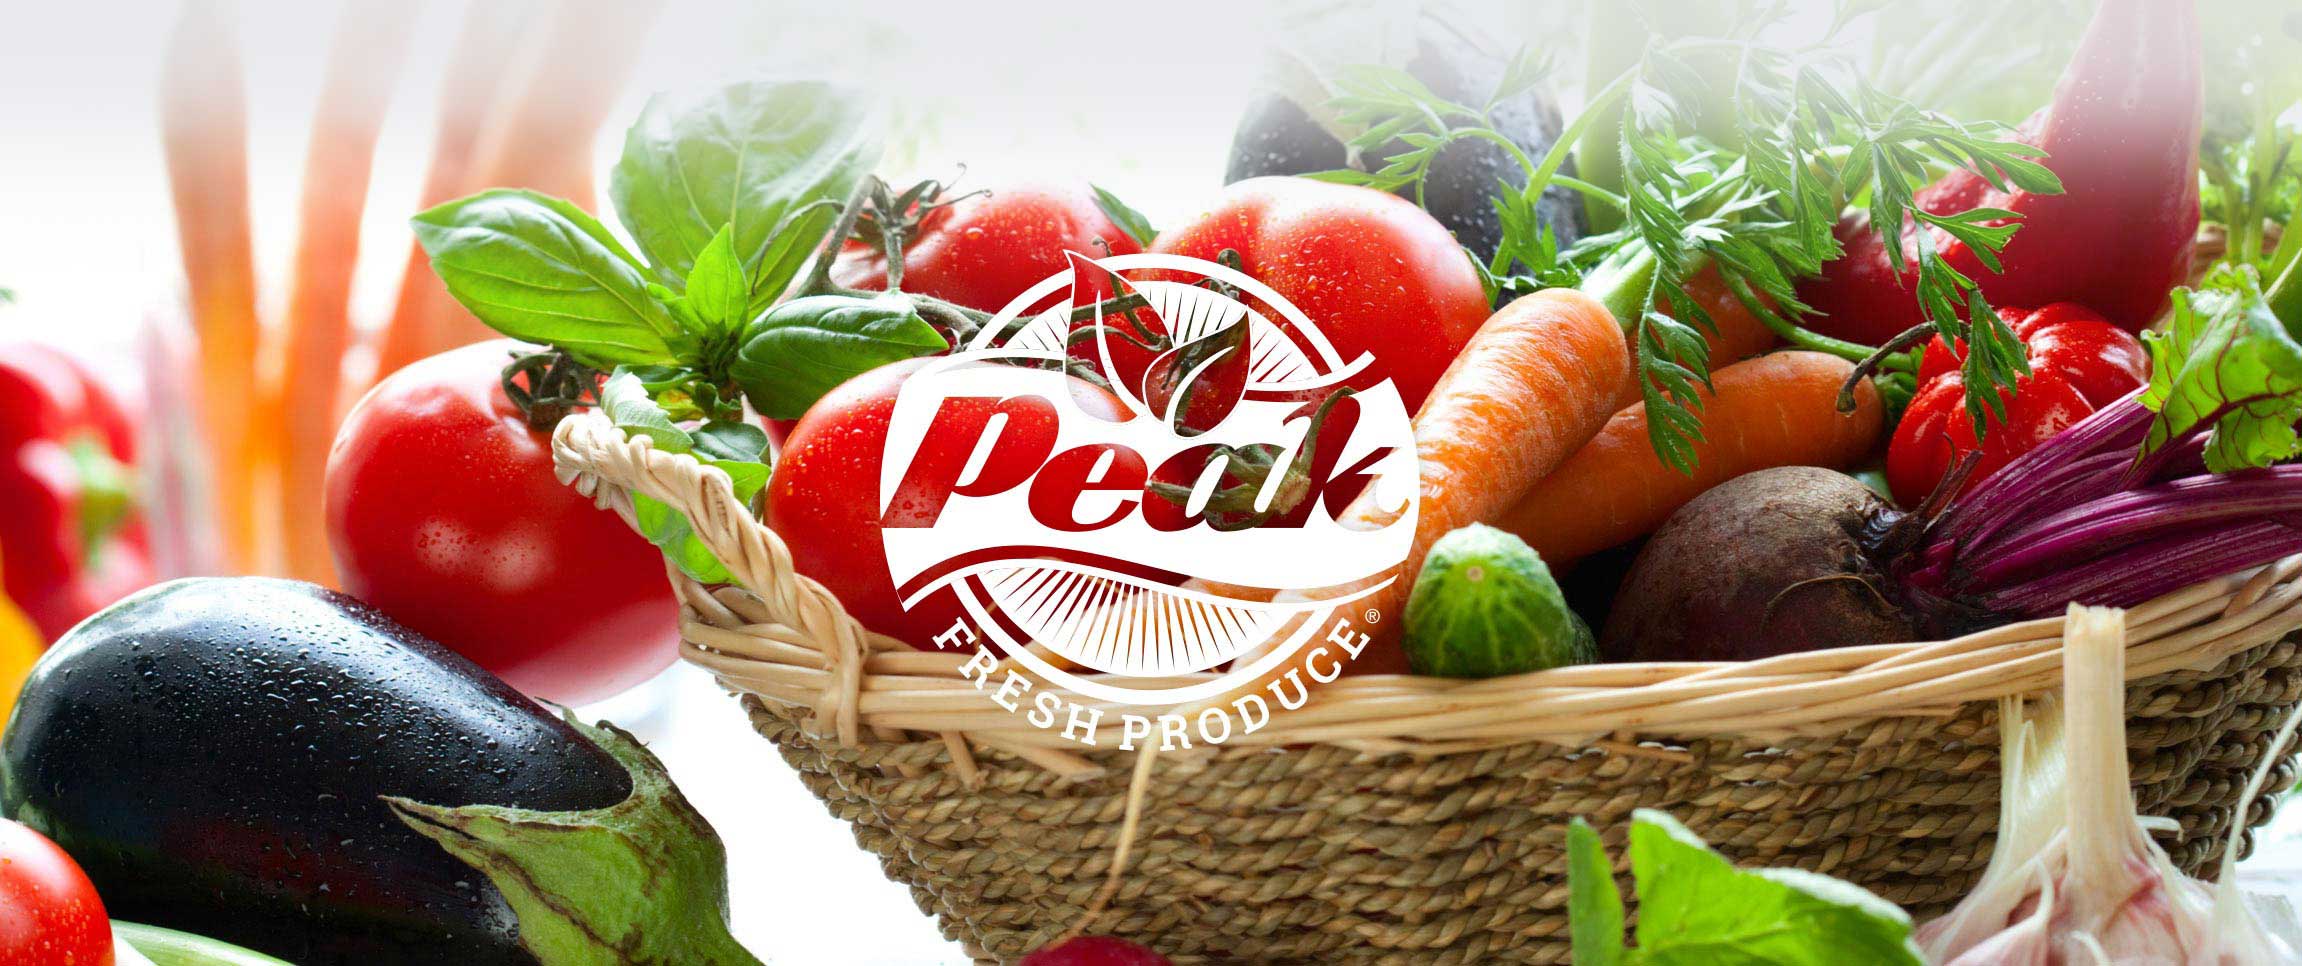 Peak Fresh Produce Vegetables